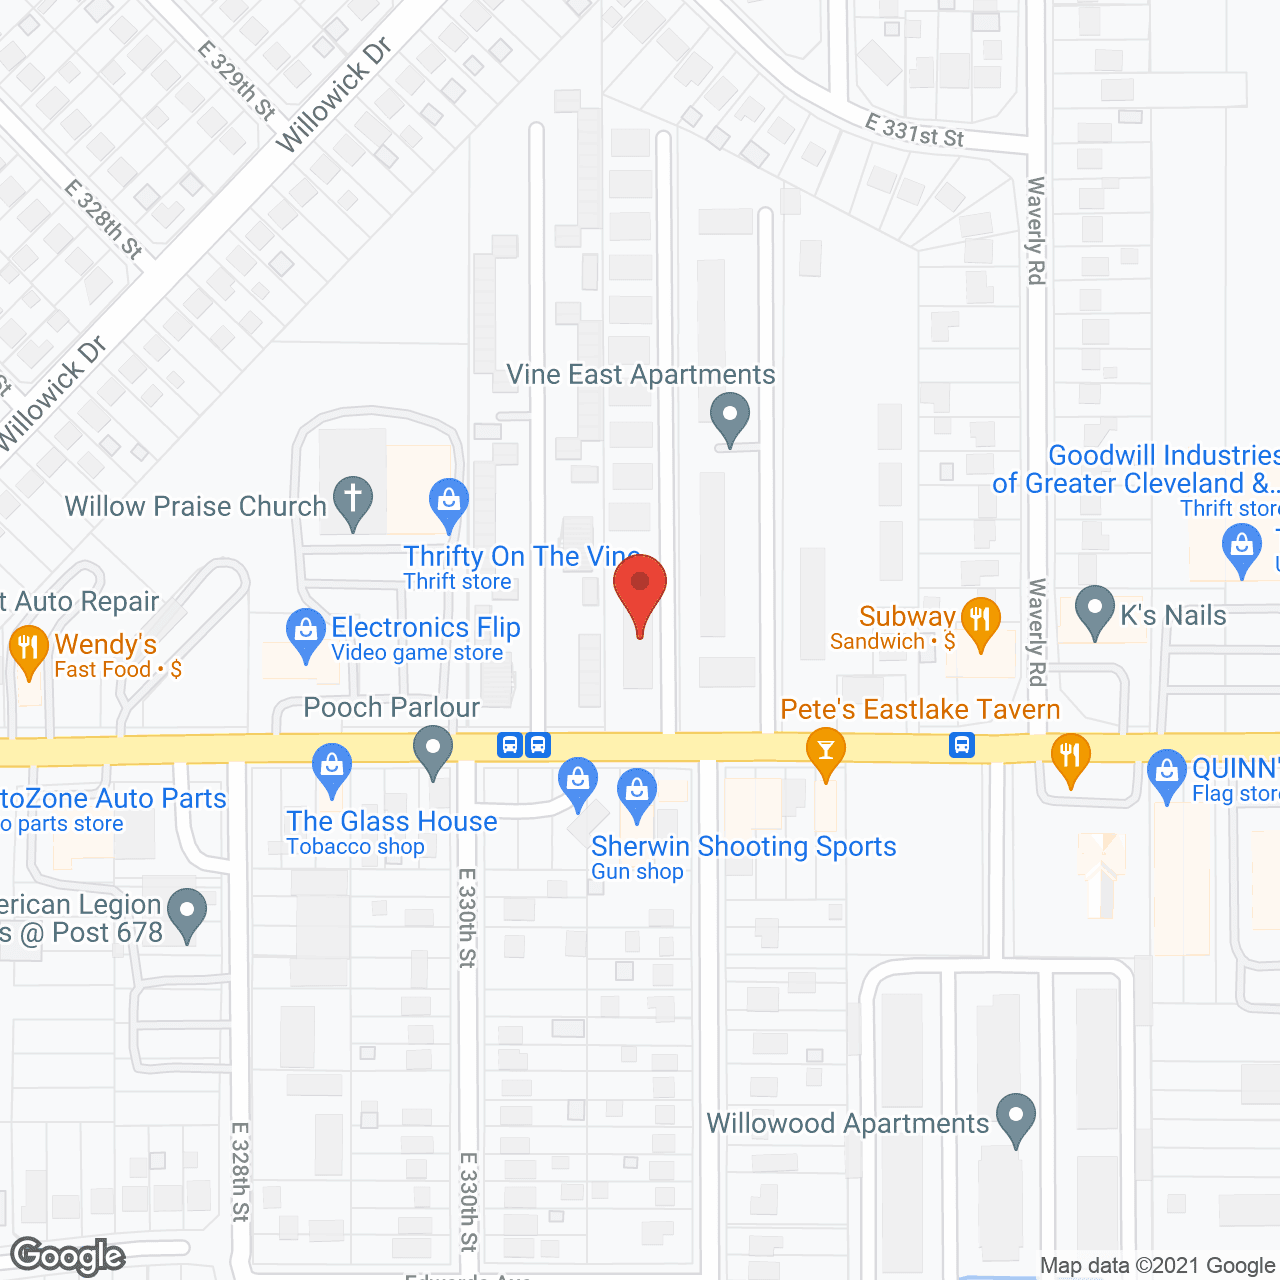 Willo Vu Apartments in google map